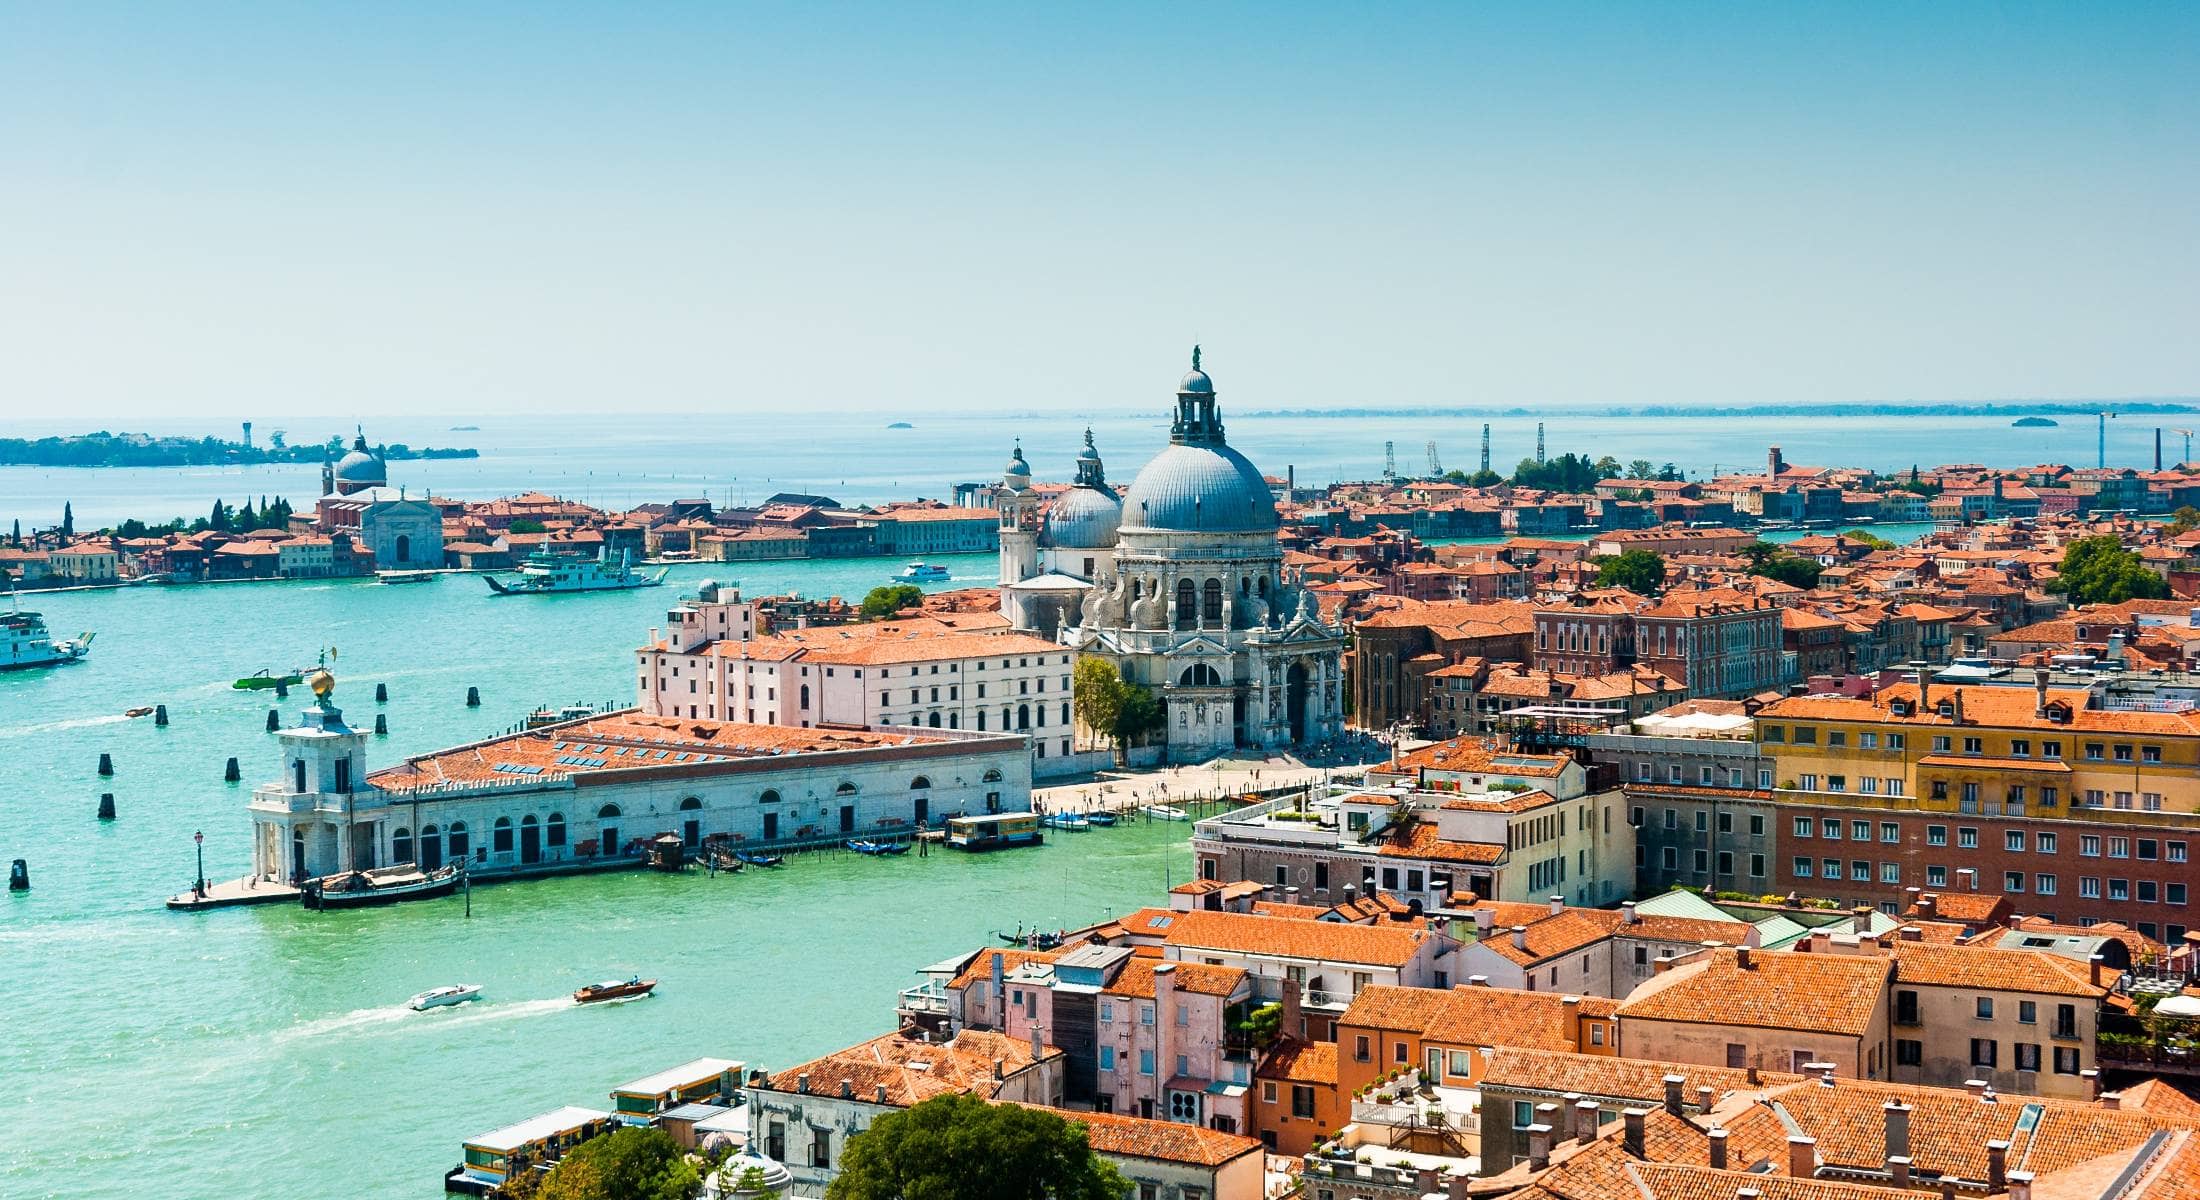 Albergo San Marco in Venice - Book a luxury hotel near to St. Mark's ...